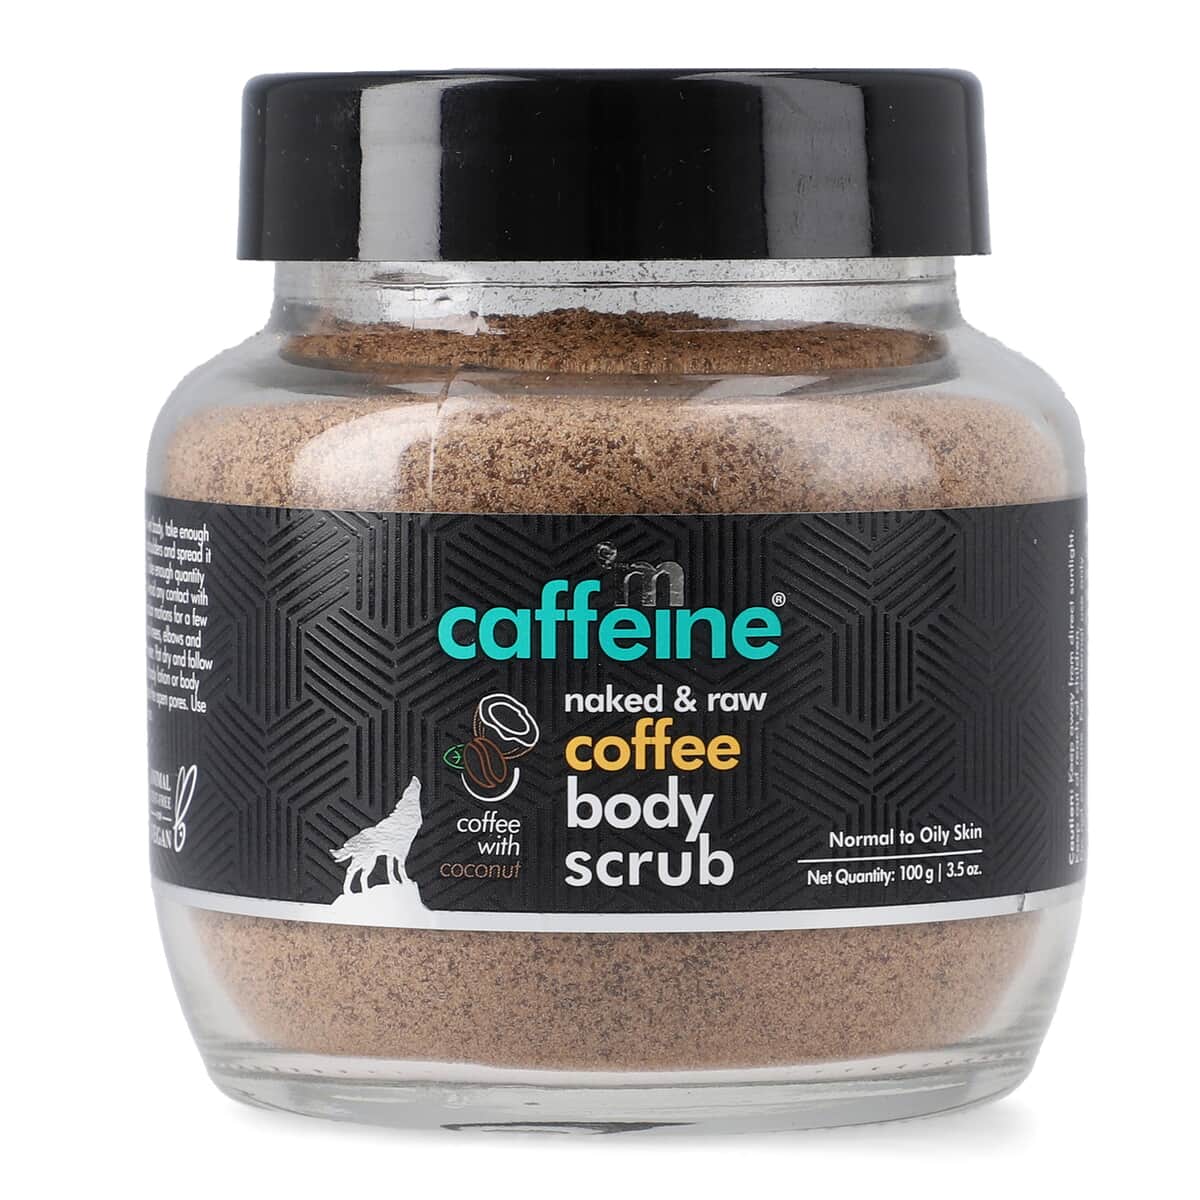 MCaffeine Naked & Raw Coffee Body Scrub with Coconut (100 g) 3.5oz image number 2